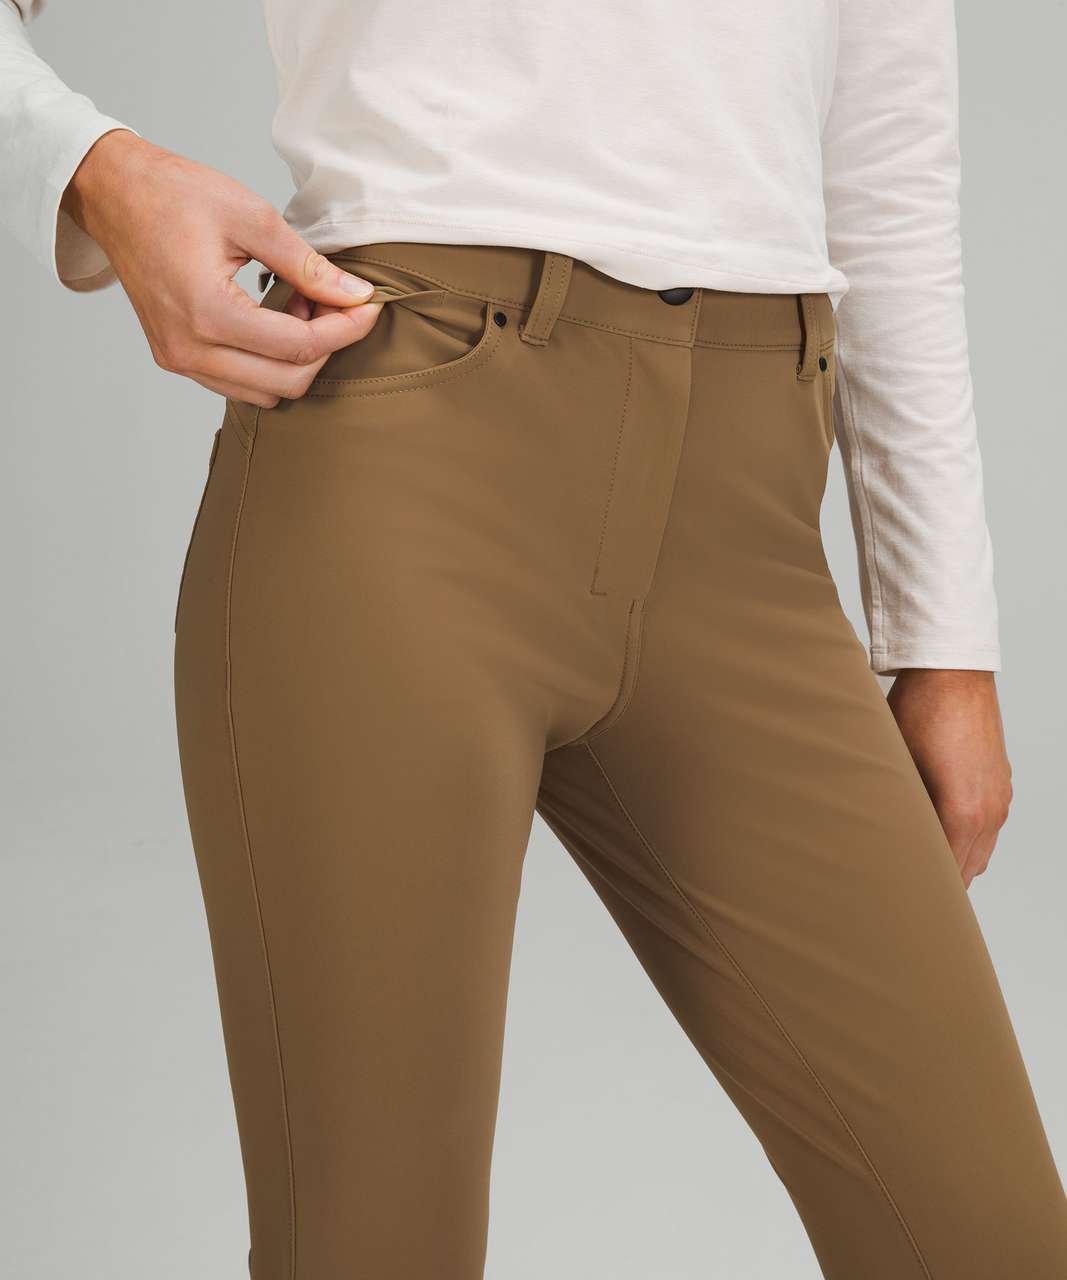 Lululemon City Sleek Slim-Fit 5 Pocket High-Rise Pant - Artifact 